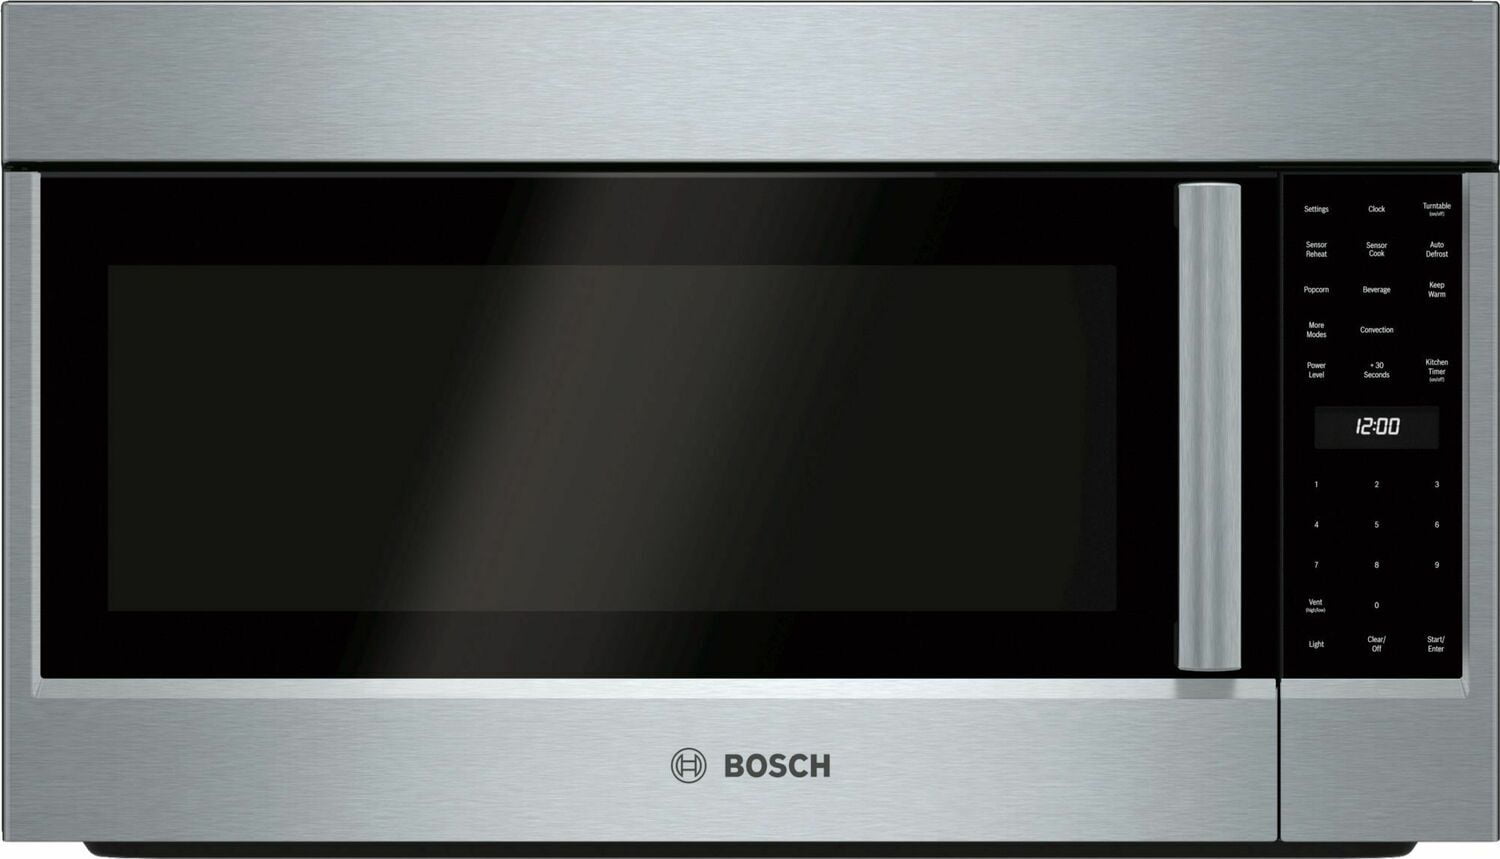 Bosch HMV8053U 800 Series Otr